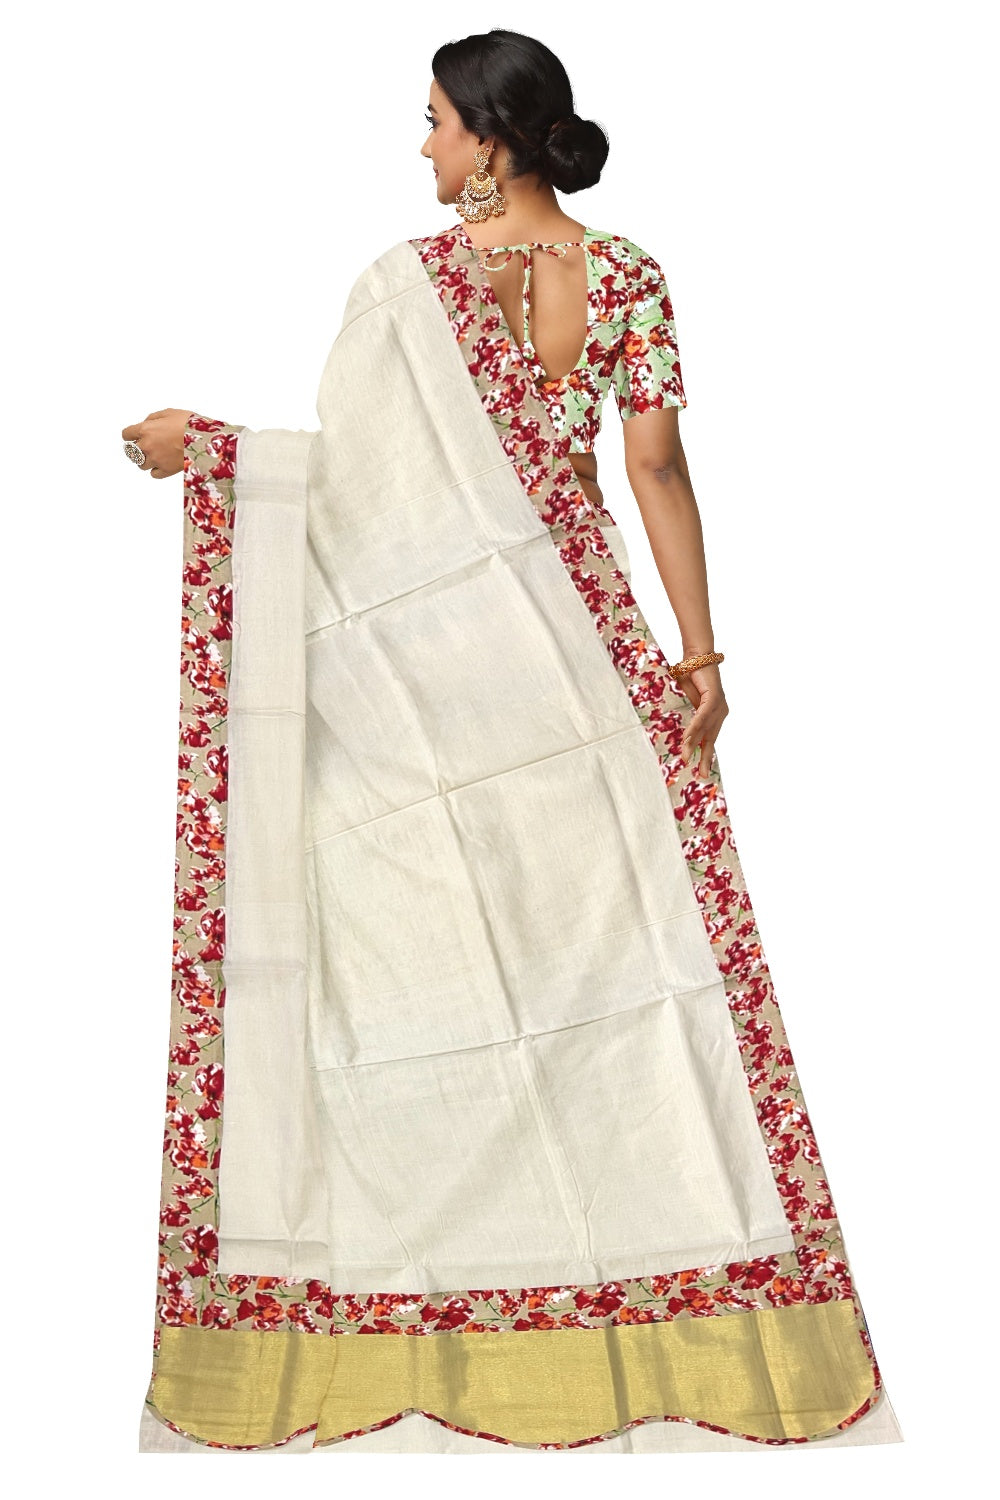 Kerala Pure Cotton Fusion Art Beige Floral Printed Kasavu Saree with Printed Blouse Piece